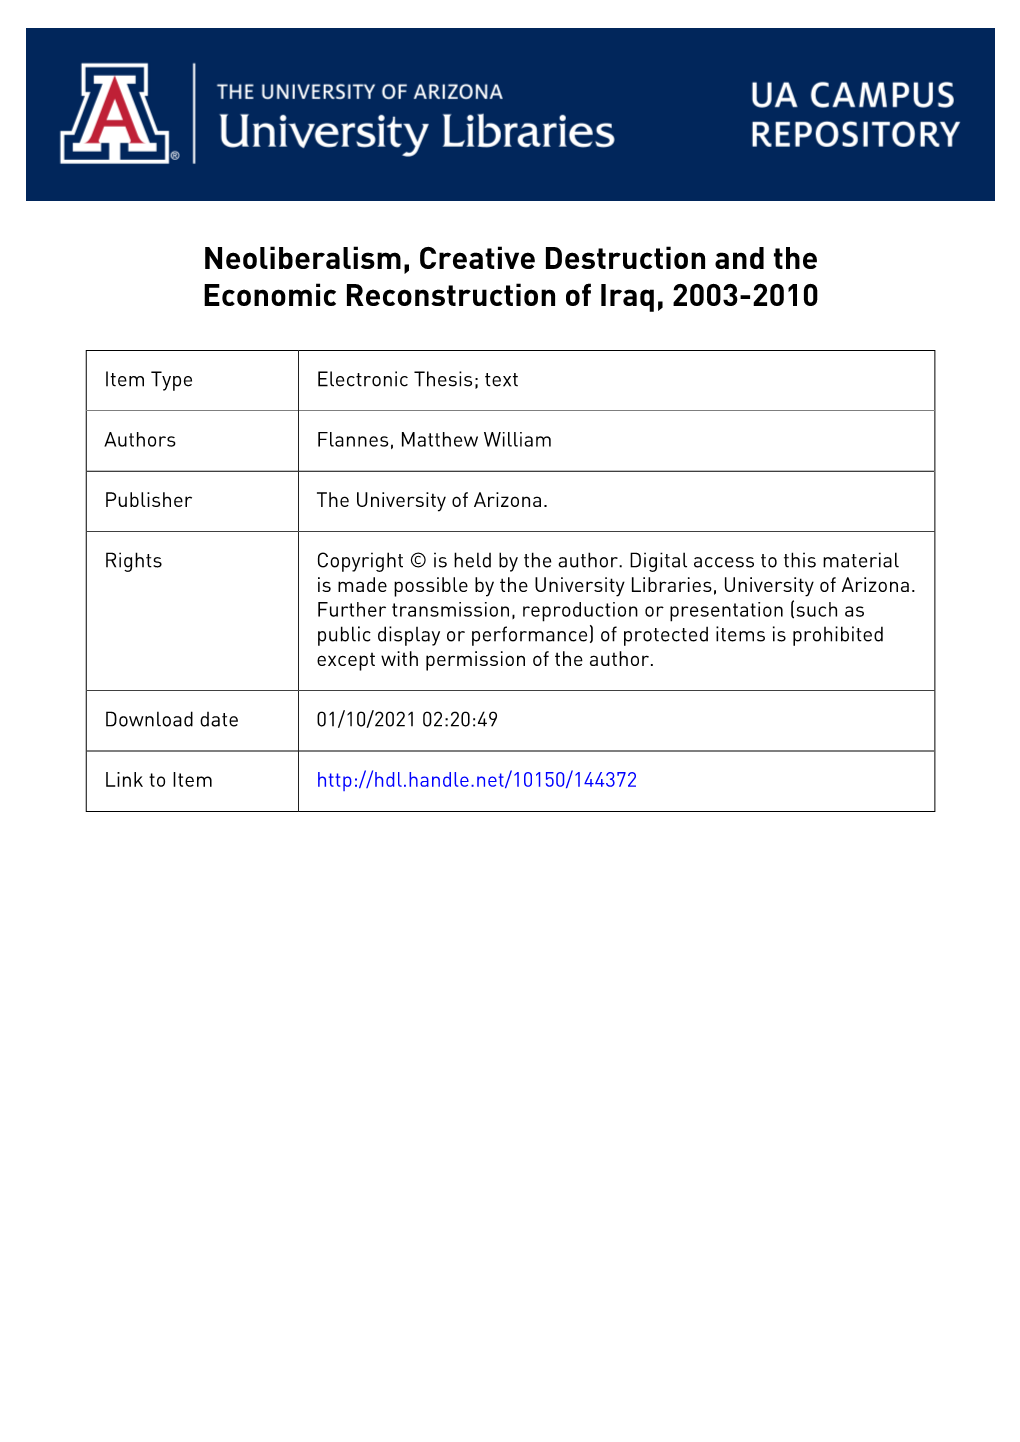 Neoliberalism, Creative Destruction and the Economic Reconstruction of Iraq, 2003-2010